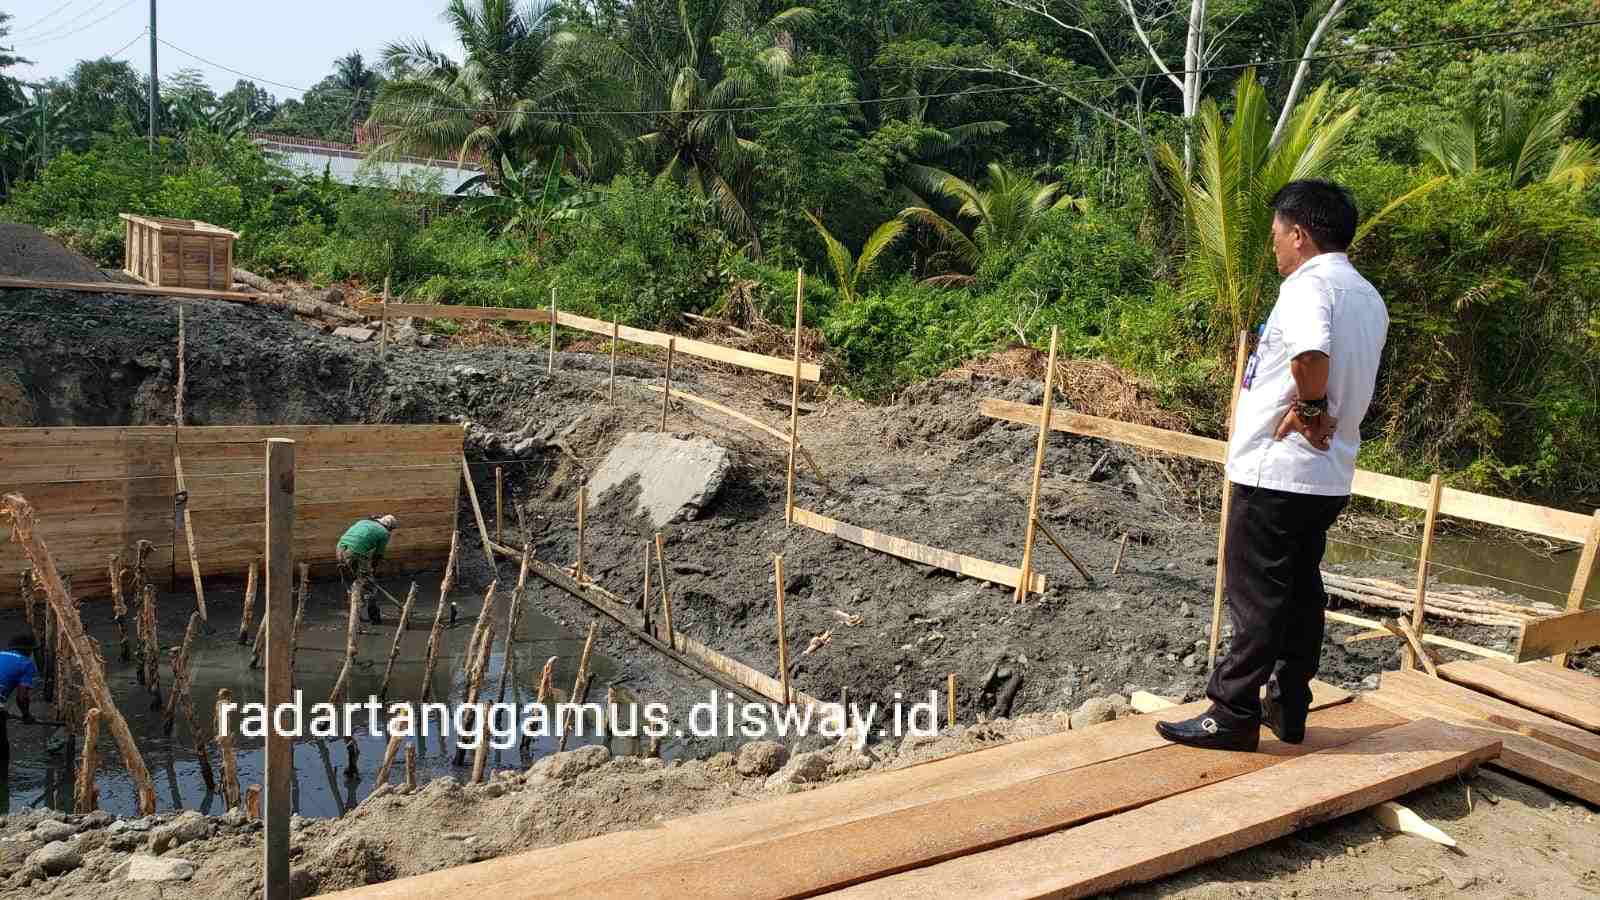 Akhirnya, Jembatan Way Nipah, Pematang Sawa Tanggamus Lampung Dibangun Permanen